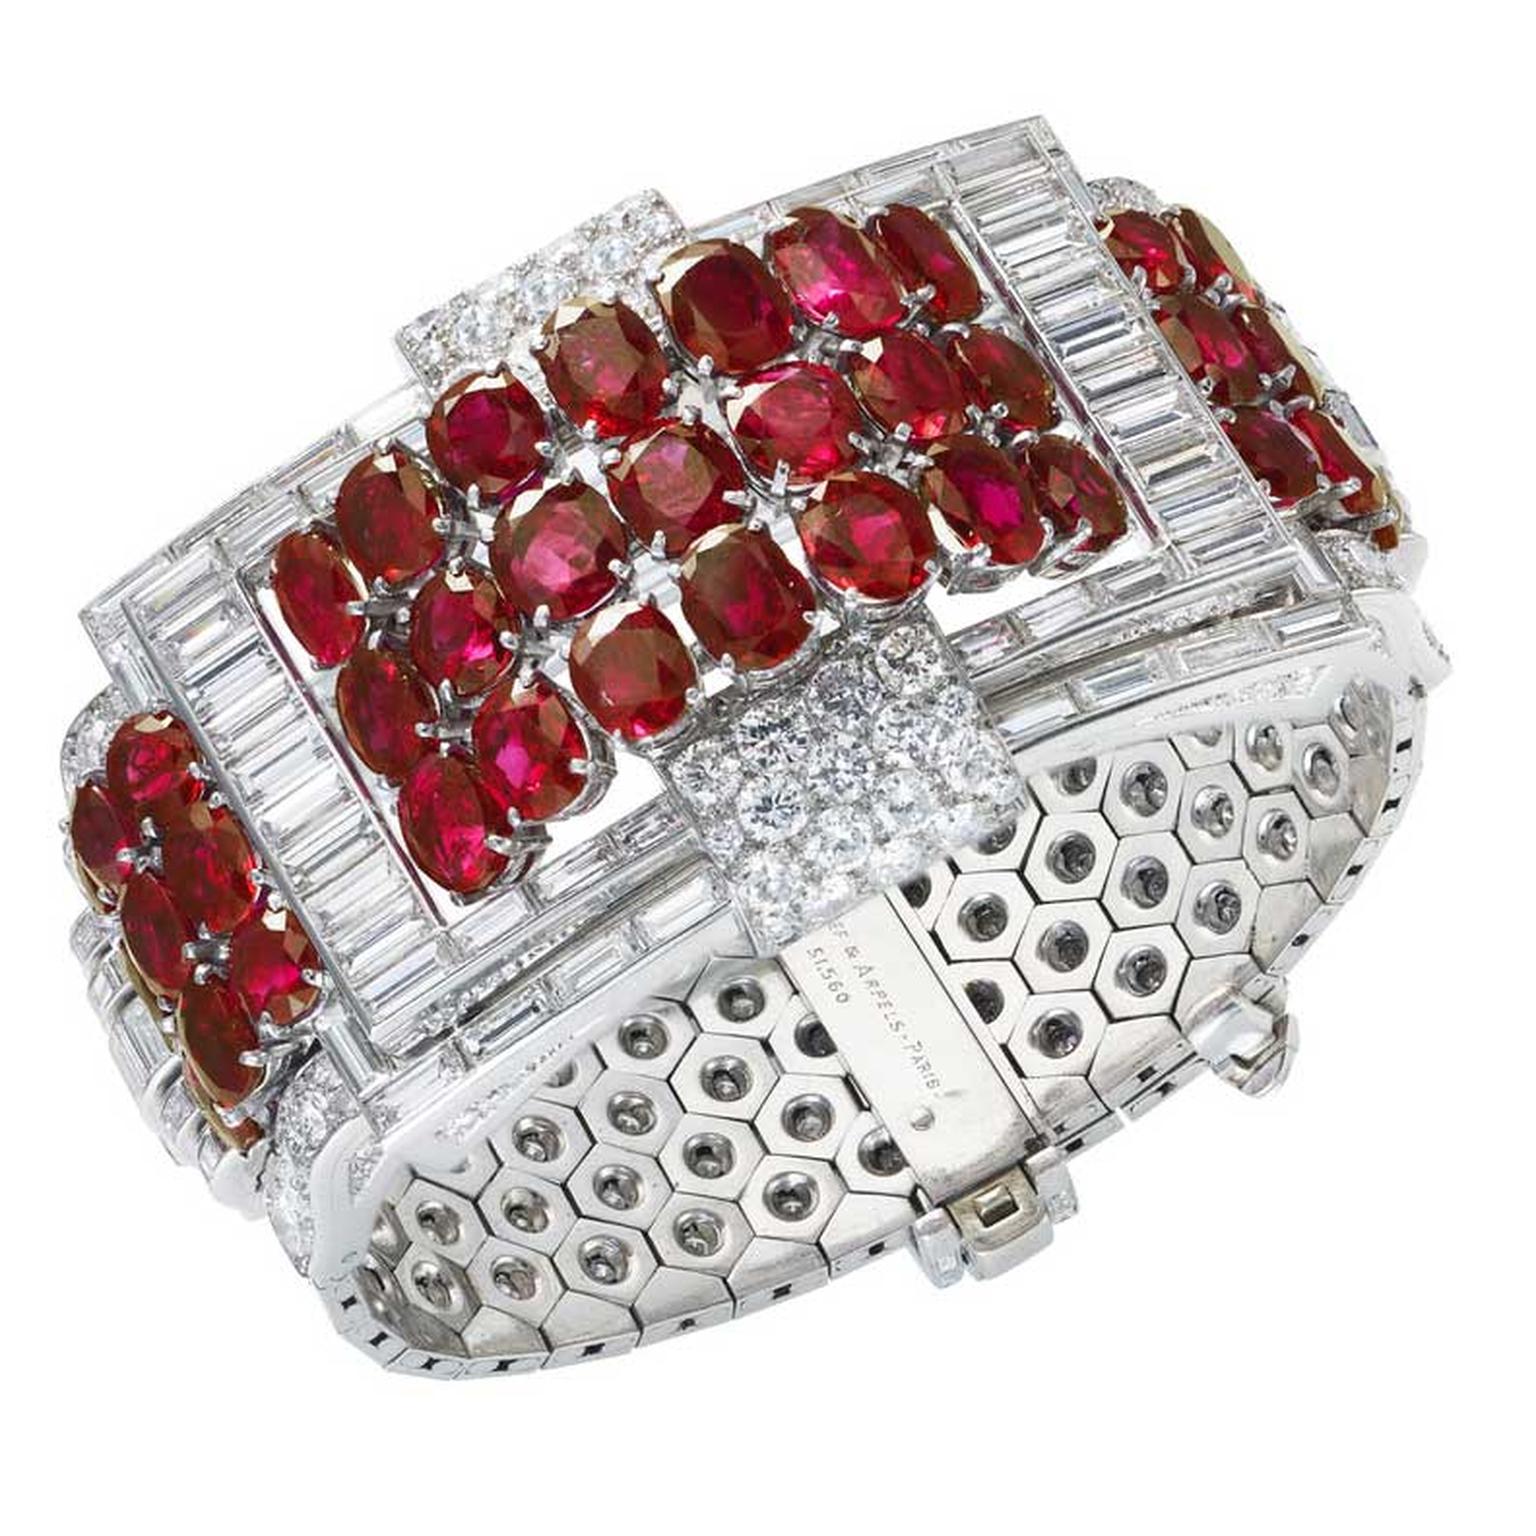 Van Cleef & Arpels Art Deco Ludo ruby and diamond bracelet circa 1929 Estimate: $700,000-1,200,000